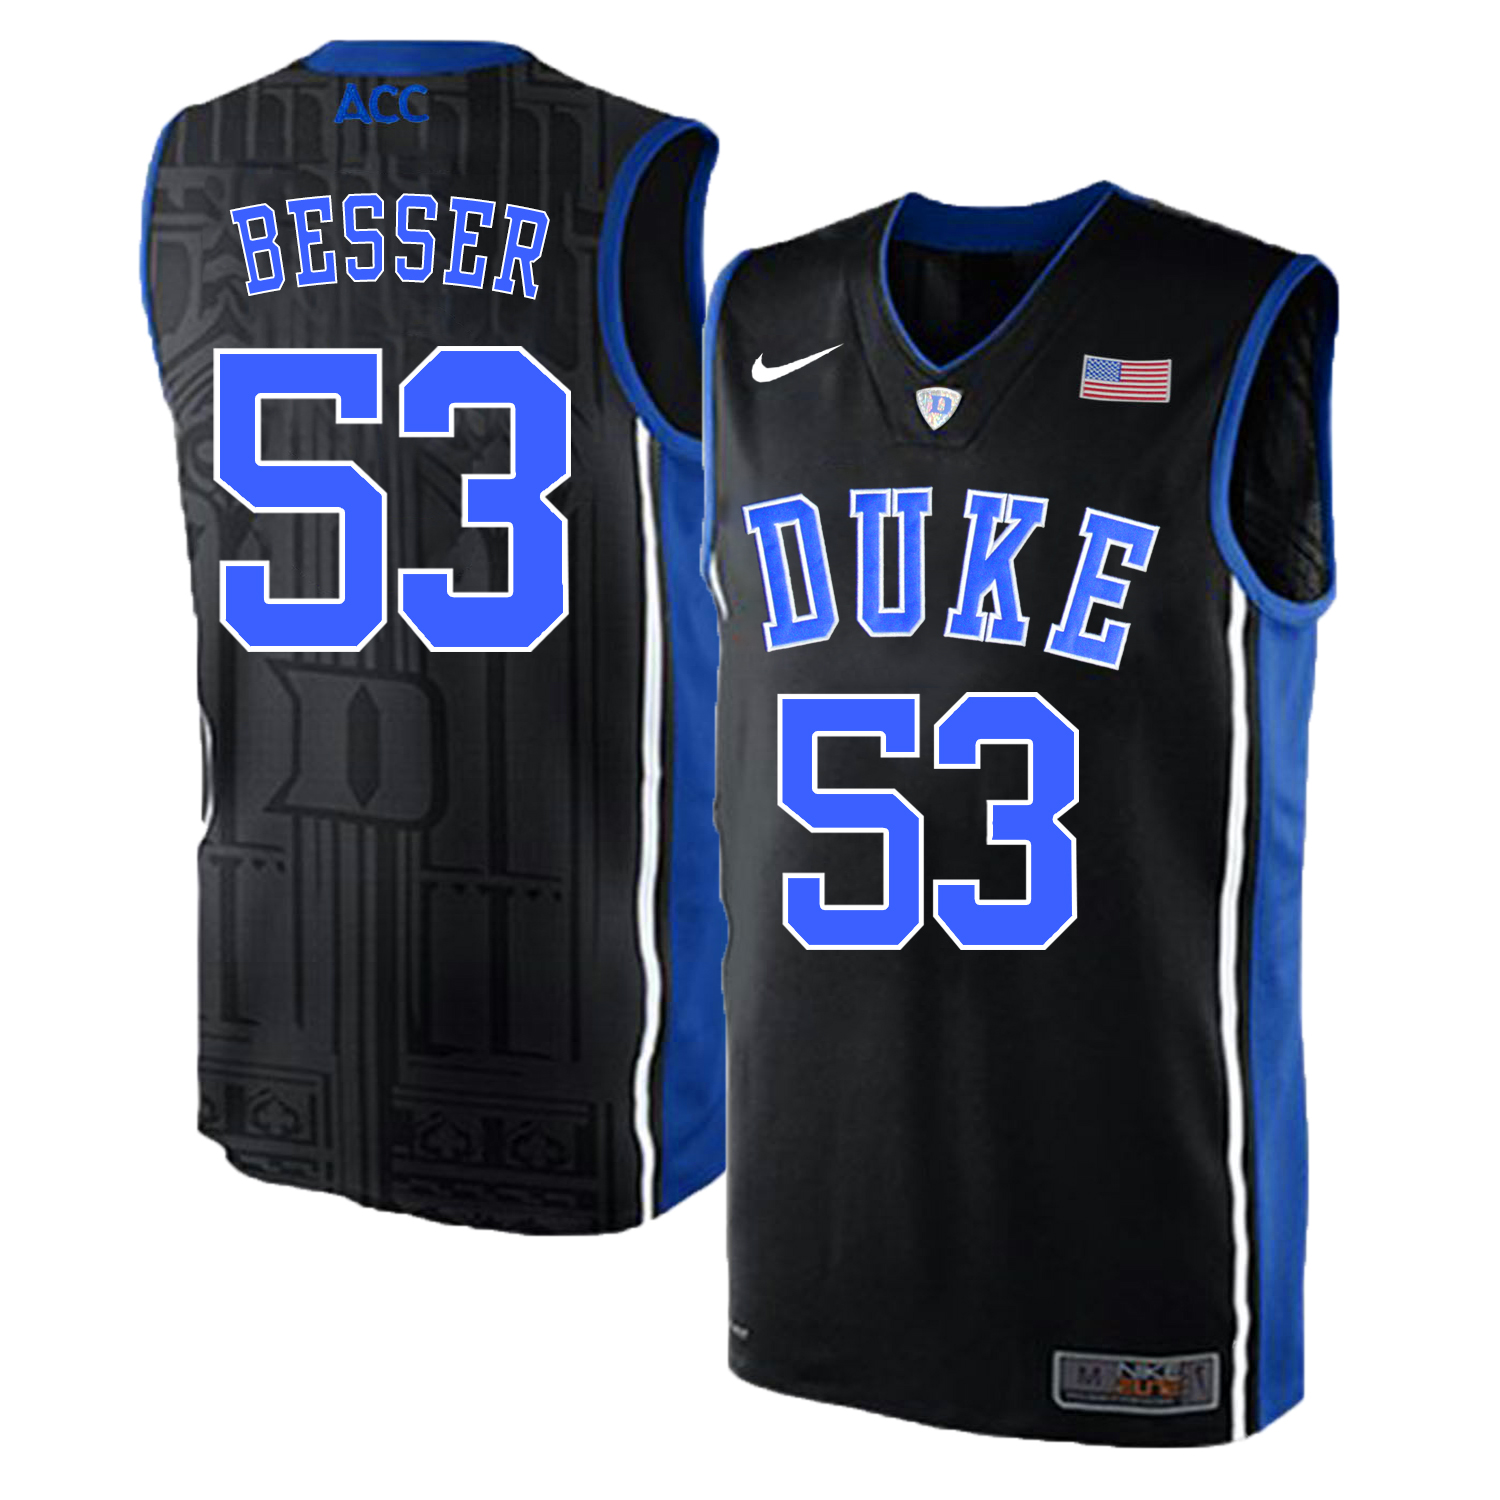 Duke Blue Devils 53 Brennan Besser Black Elite Nike College Basketball Jersey